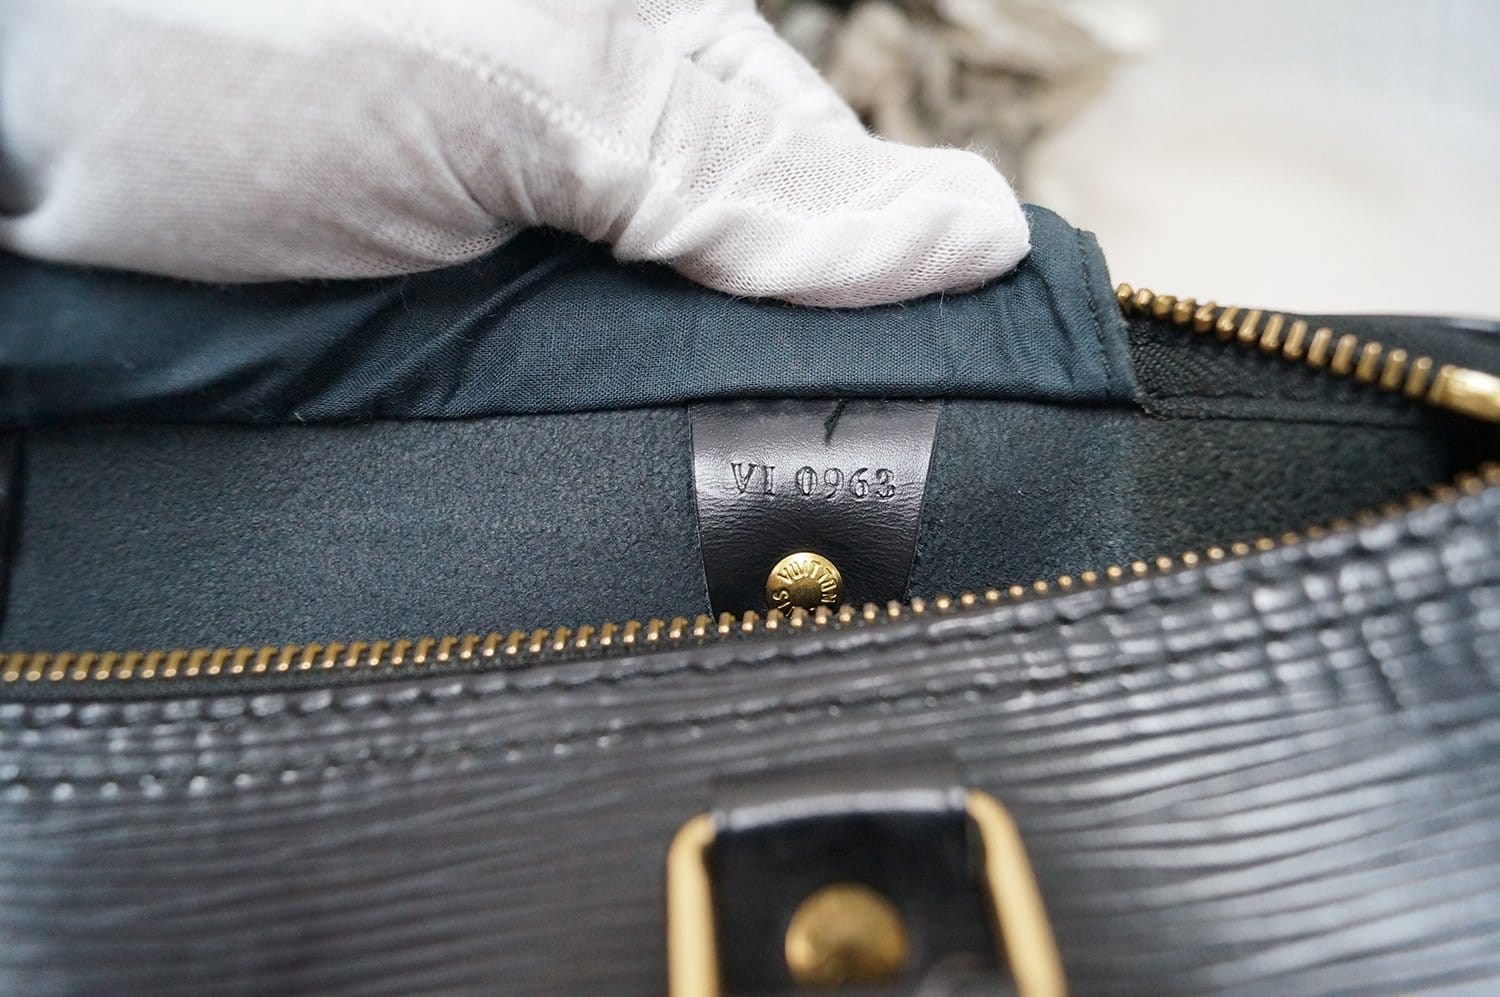 Louis Vuitton Speedy Epi leather handbag Excellent condition Black